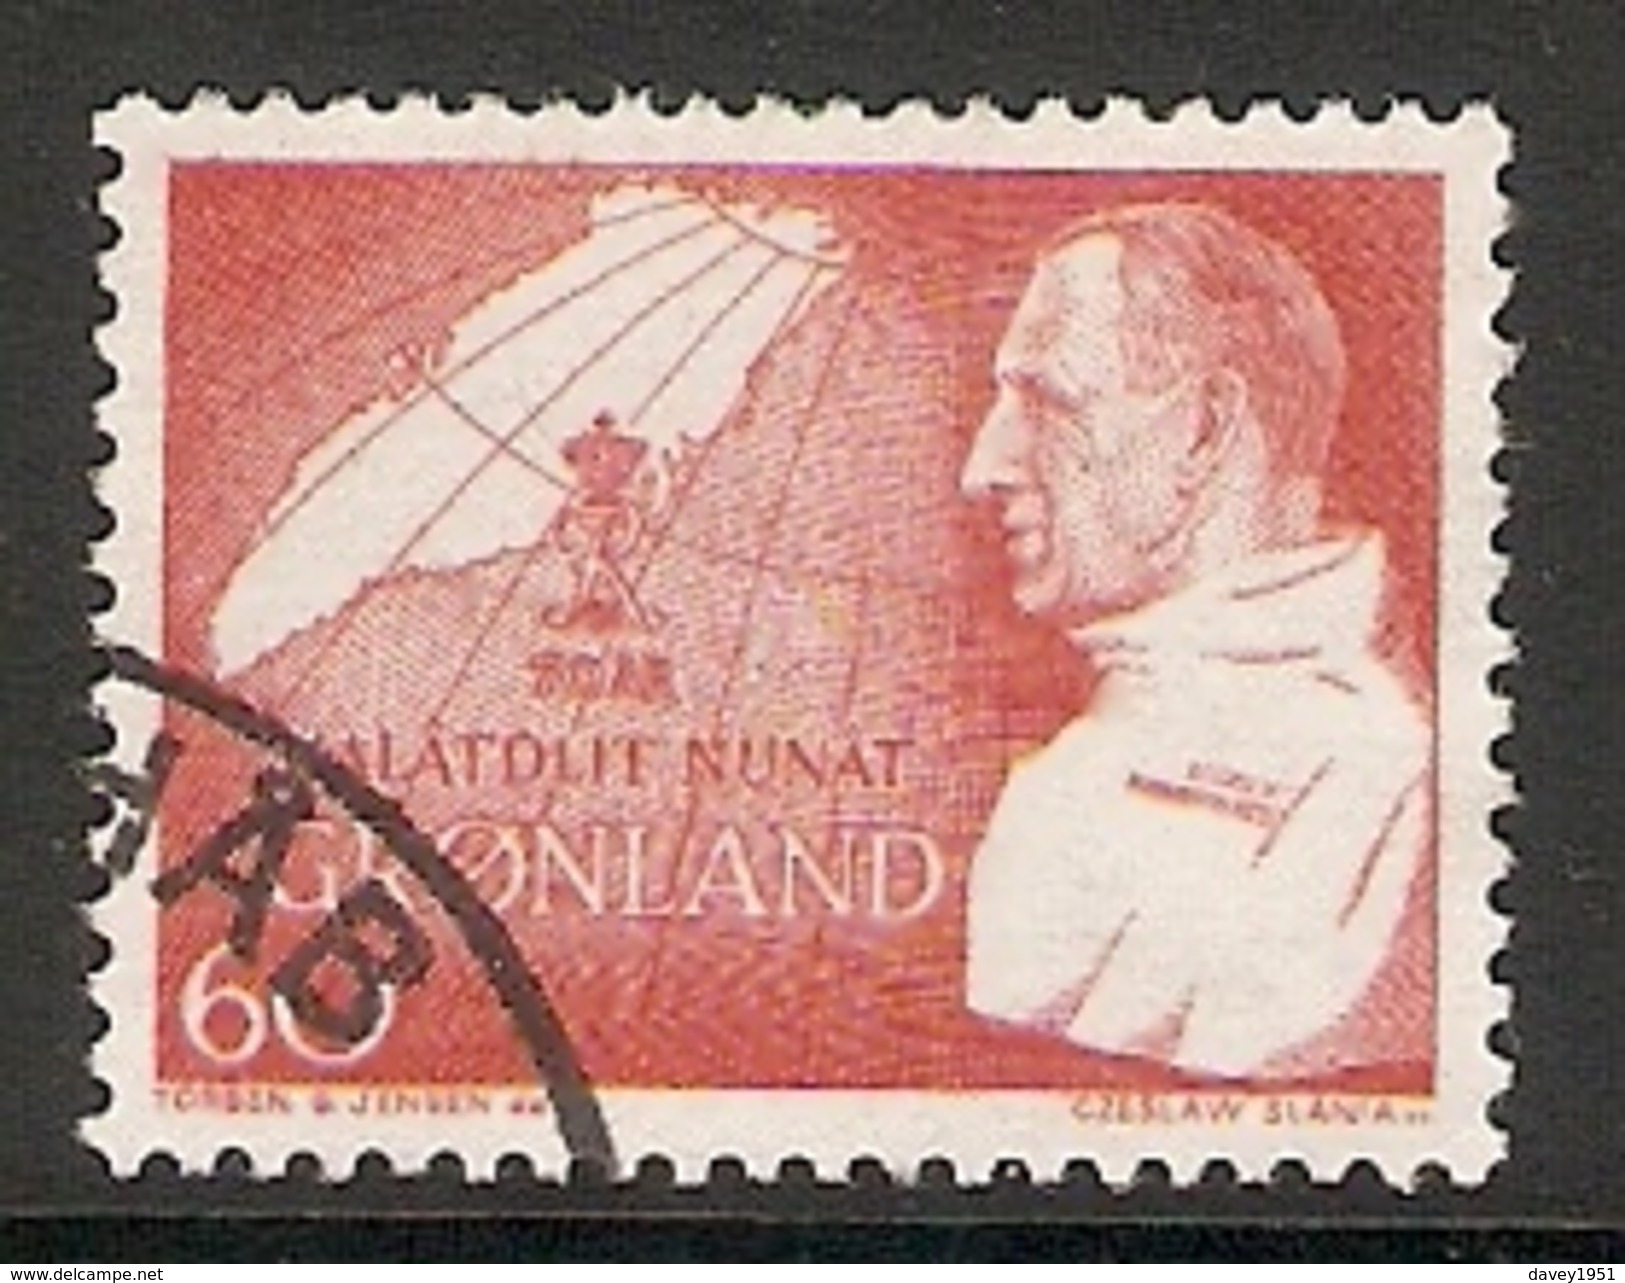 004105 Greenland 1969 Birthday 60o FU - Used Stamps